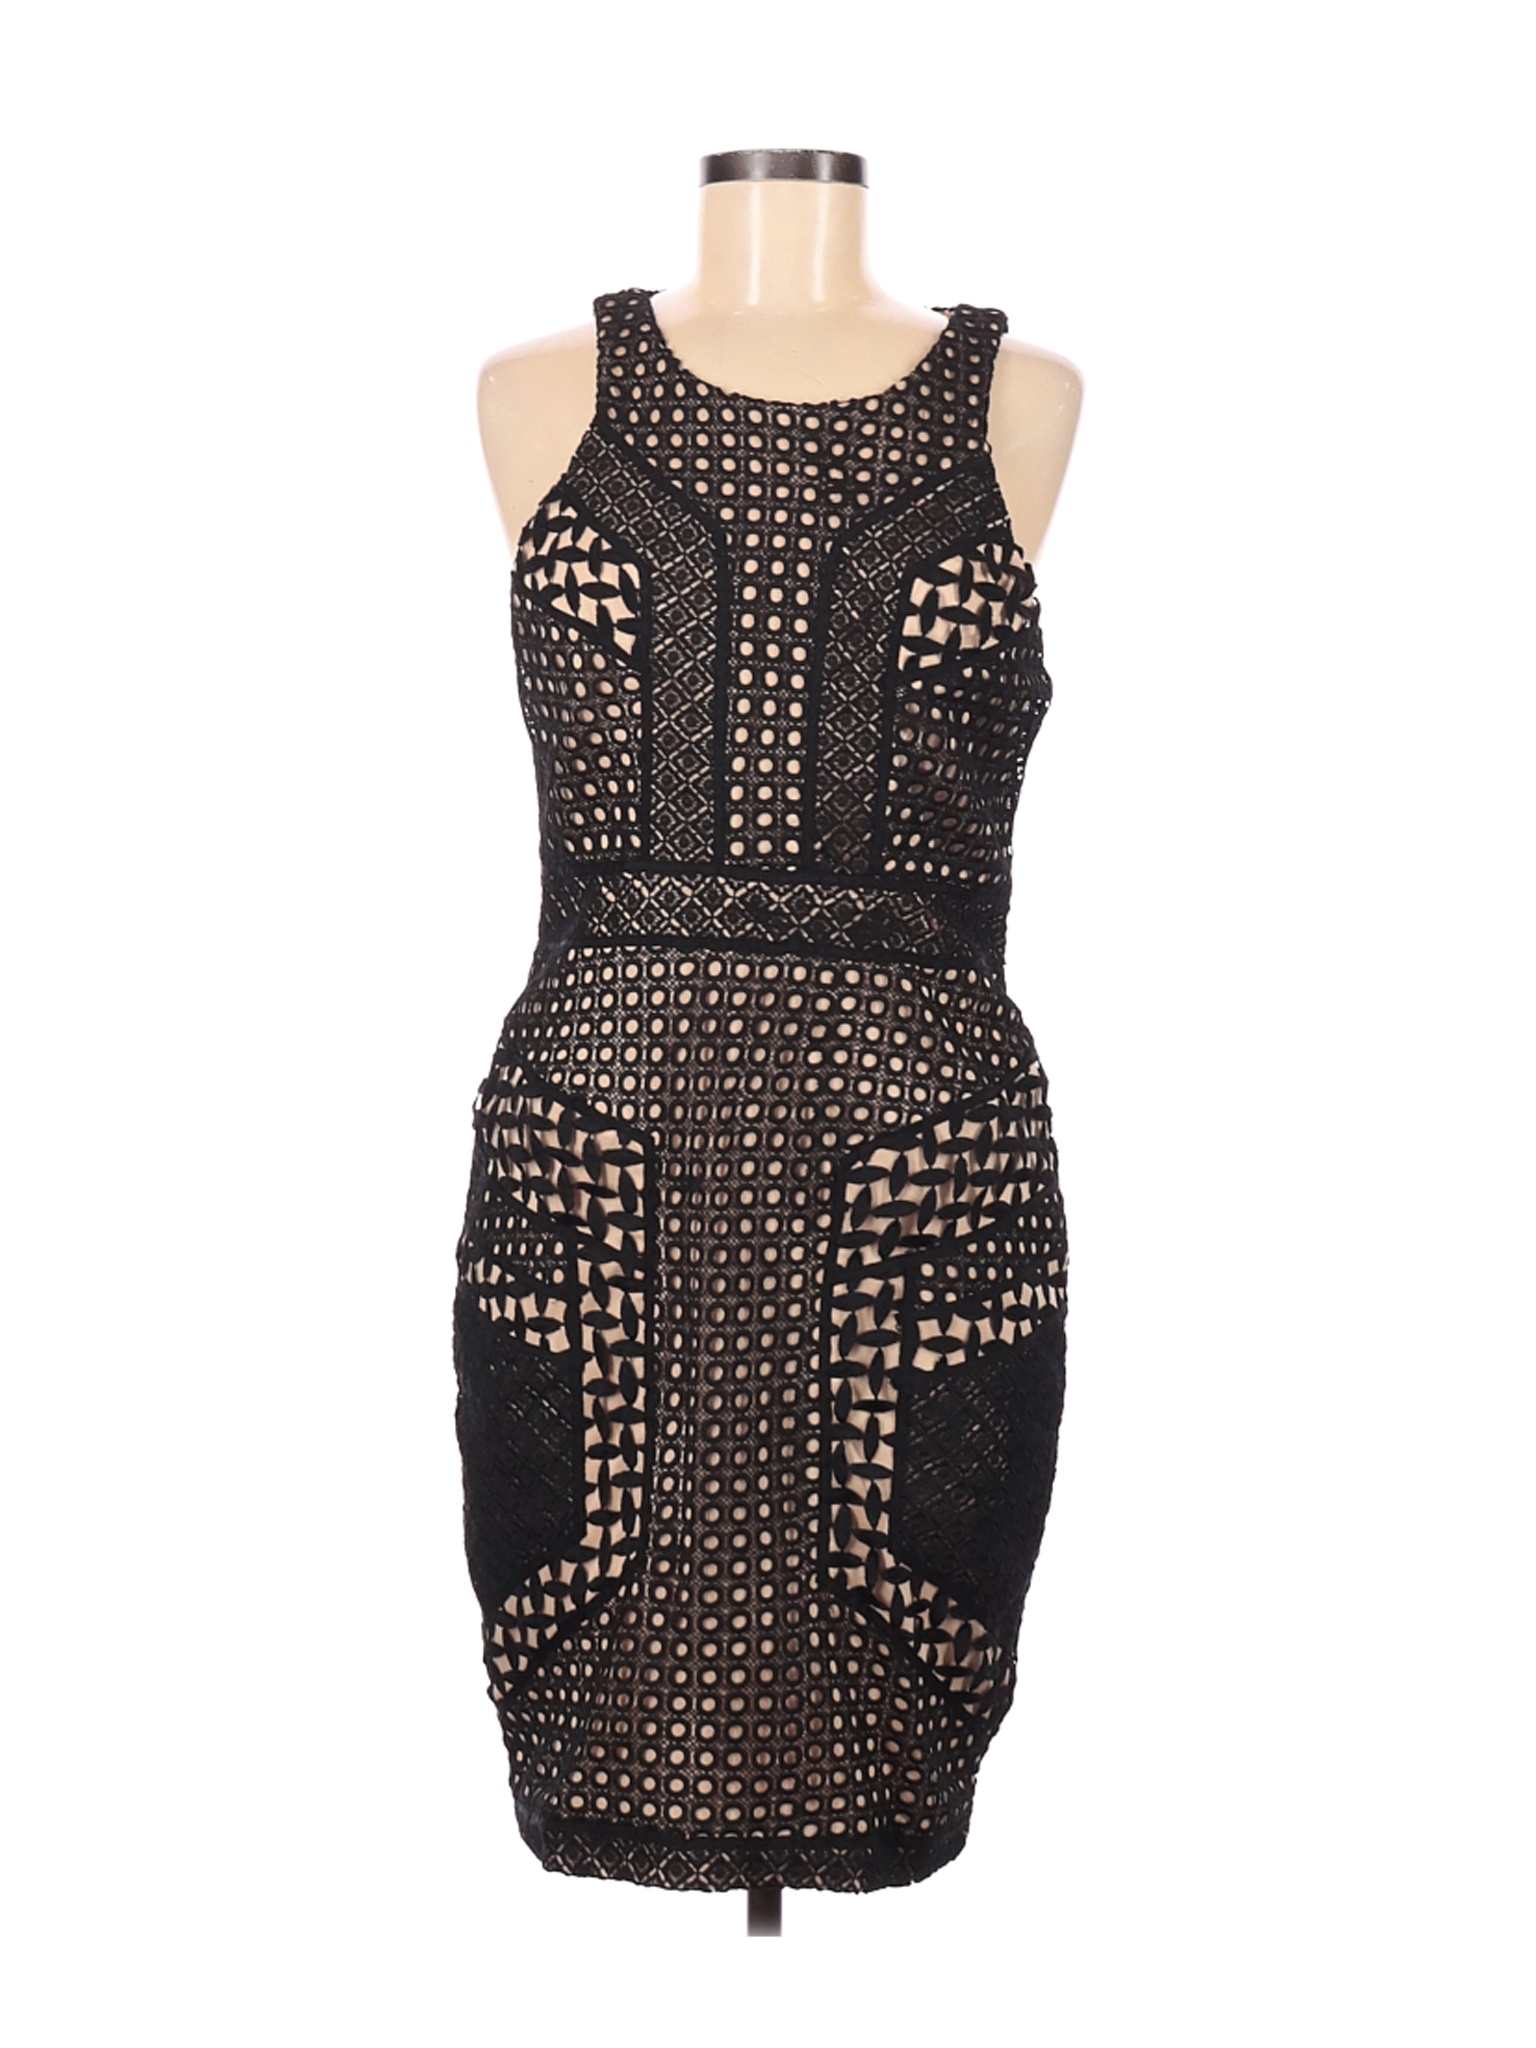 NWT Gianni Bini Women Black Cocktail Dress M | eBay